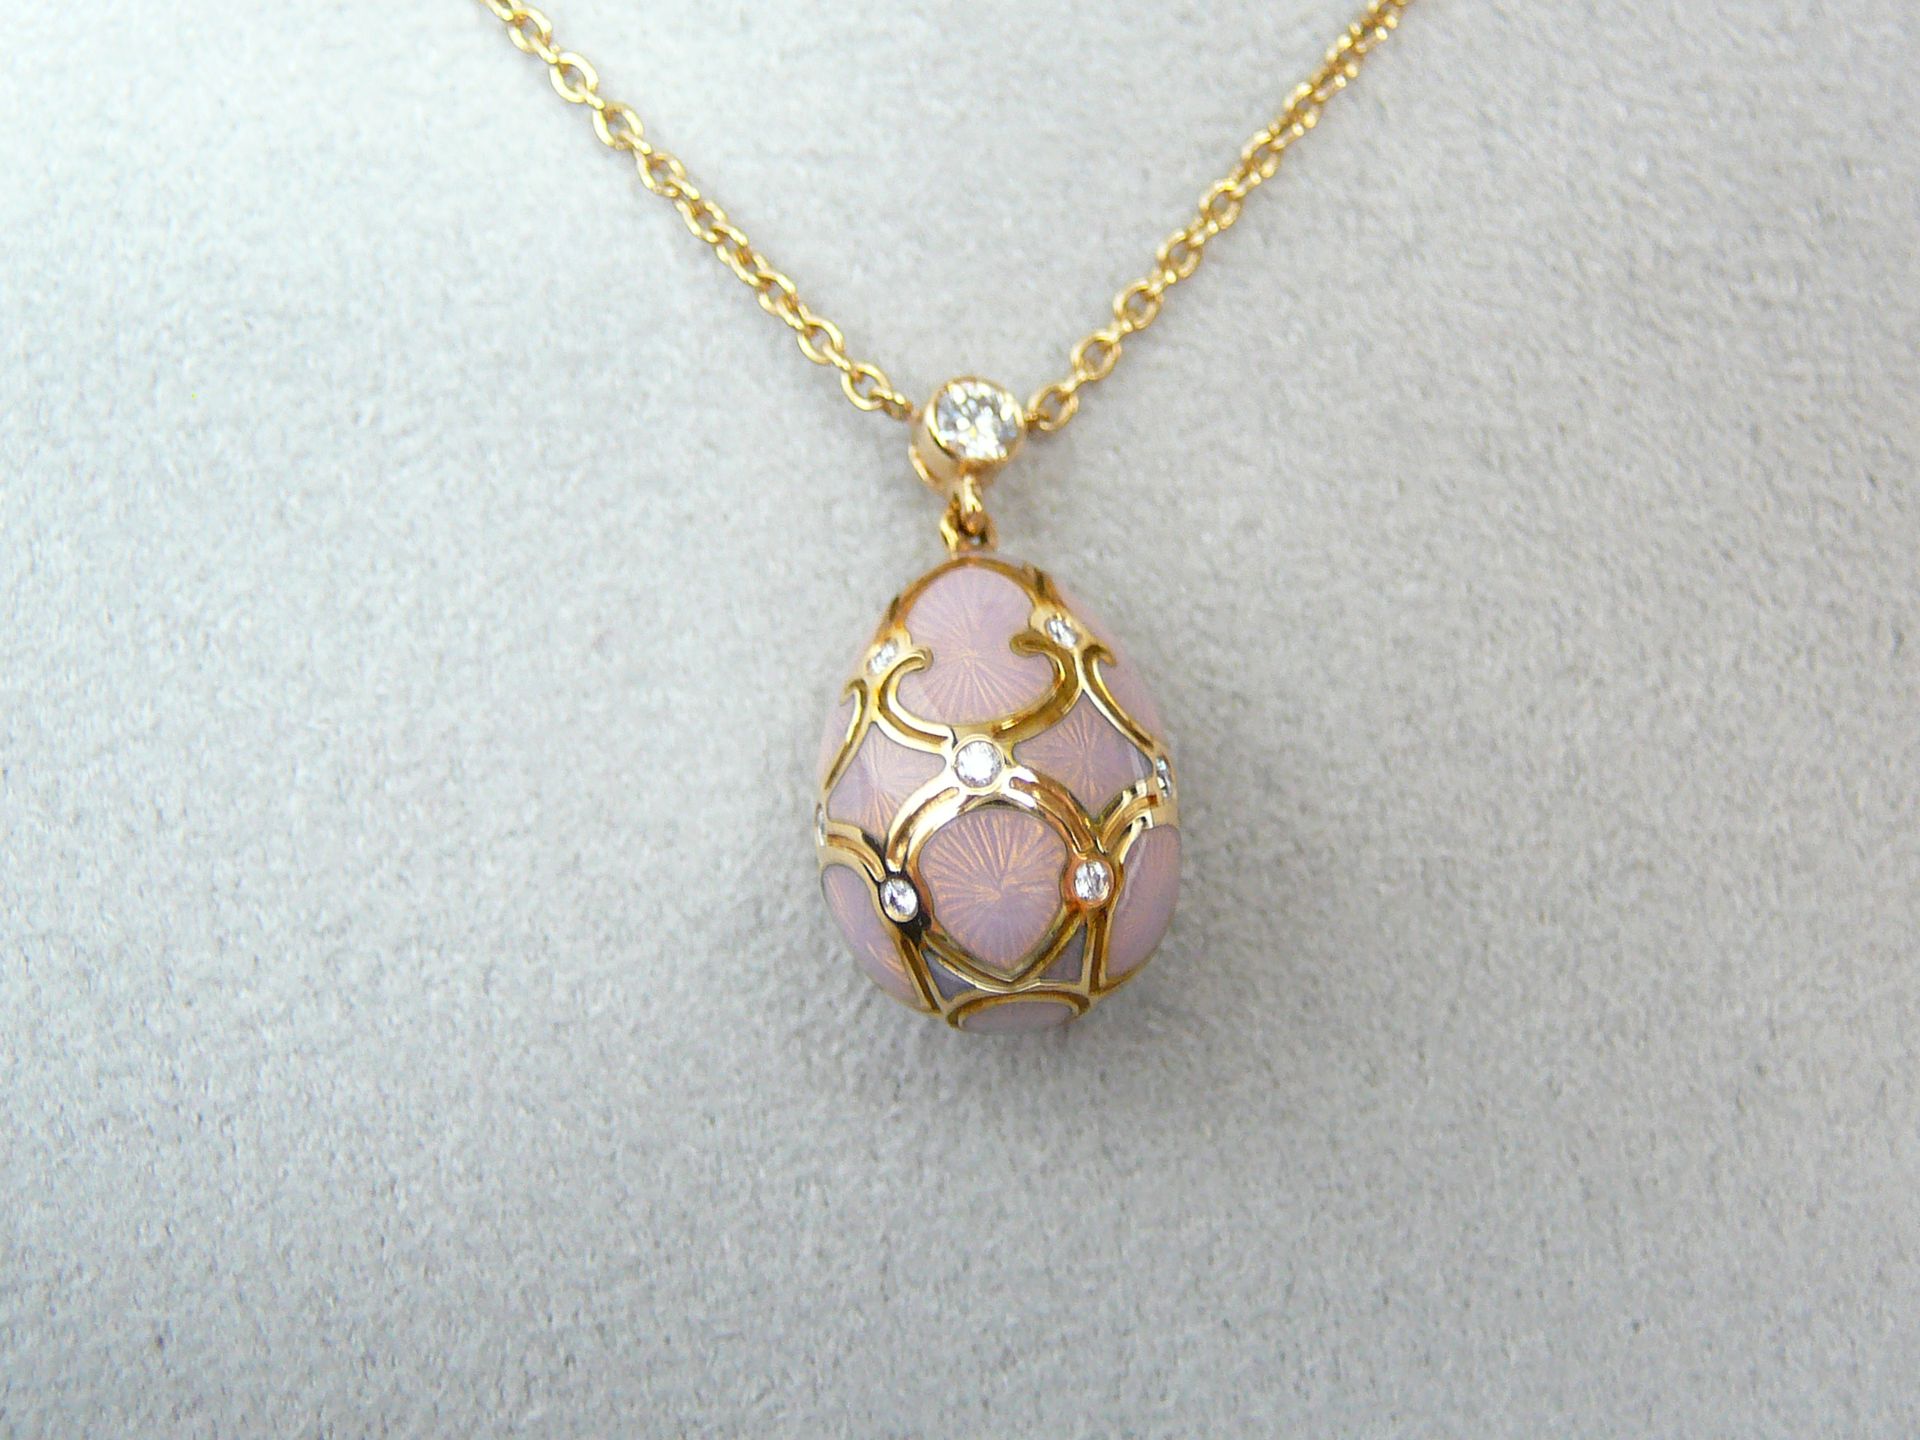 Faberge gold egg pendant - Image 2 of 4